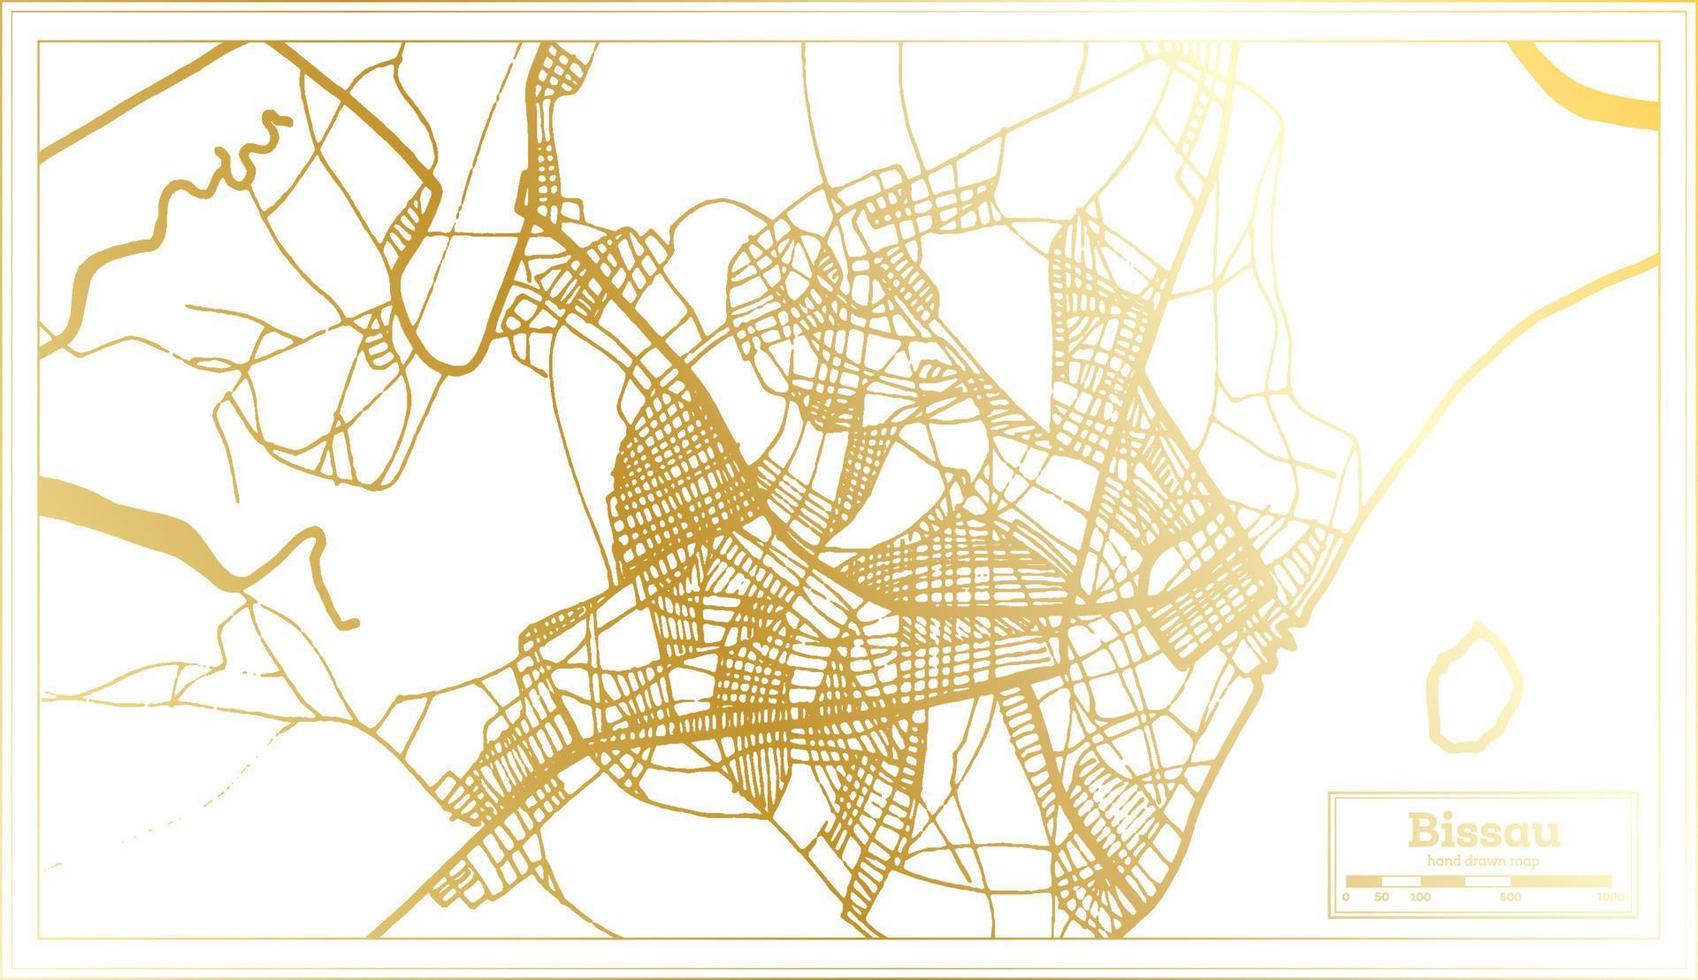 bissau republik guinea-bissau stadtplan im retro-stil in goldener farbe. Übersichtskarte. vektor